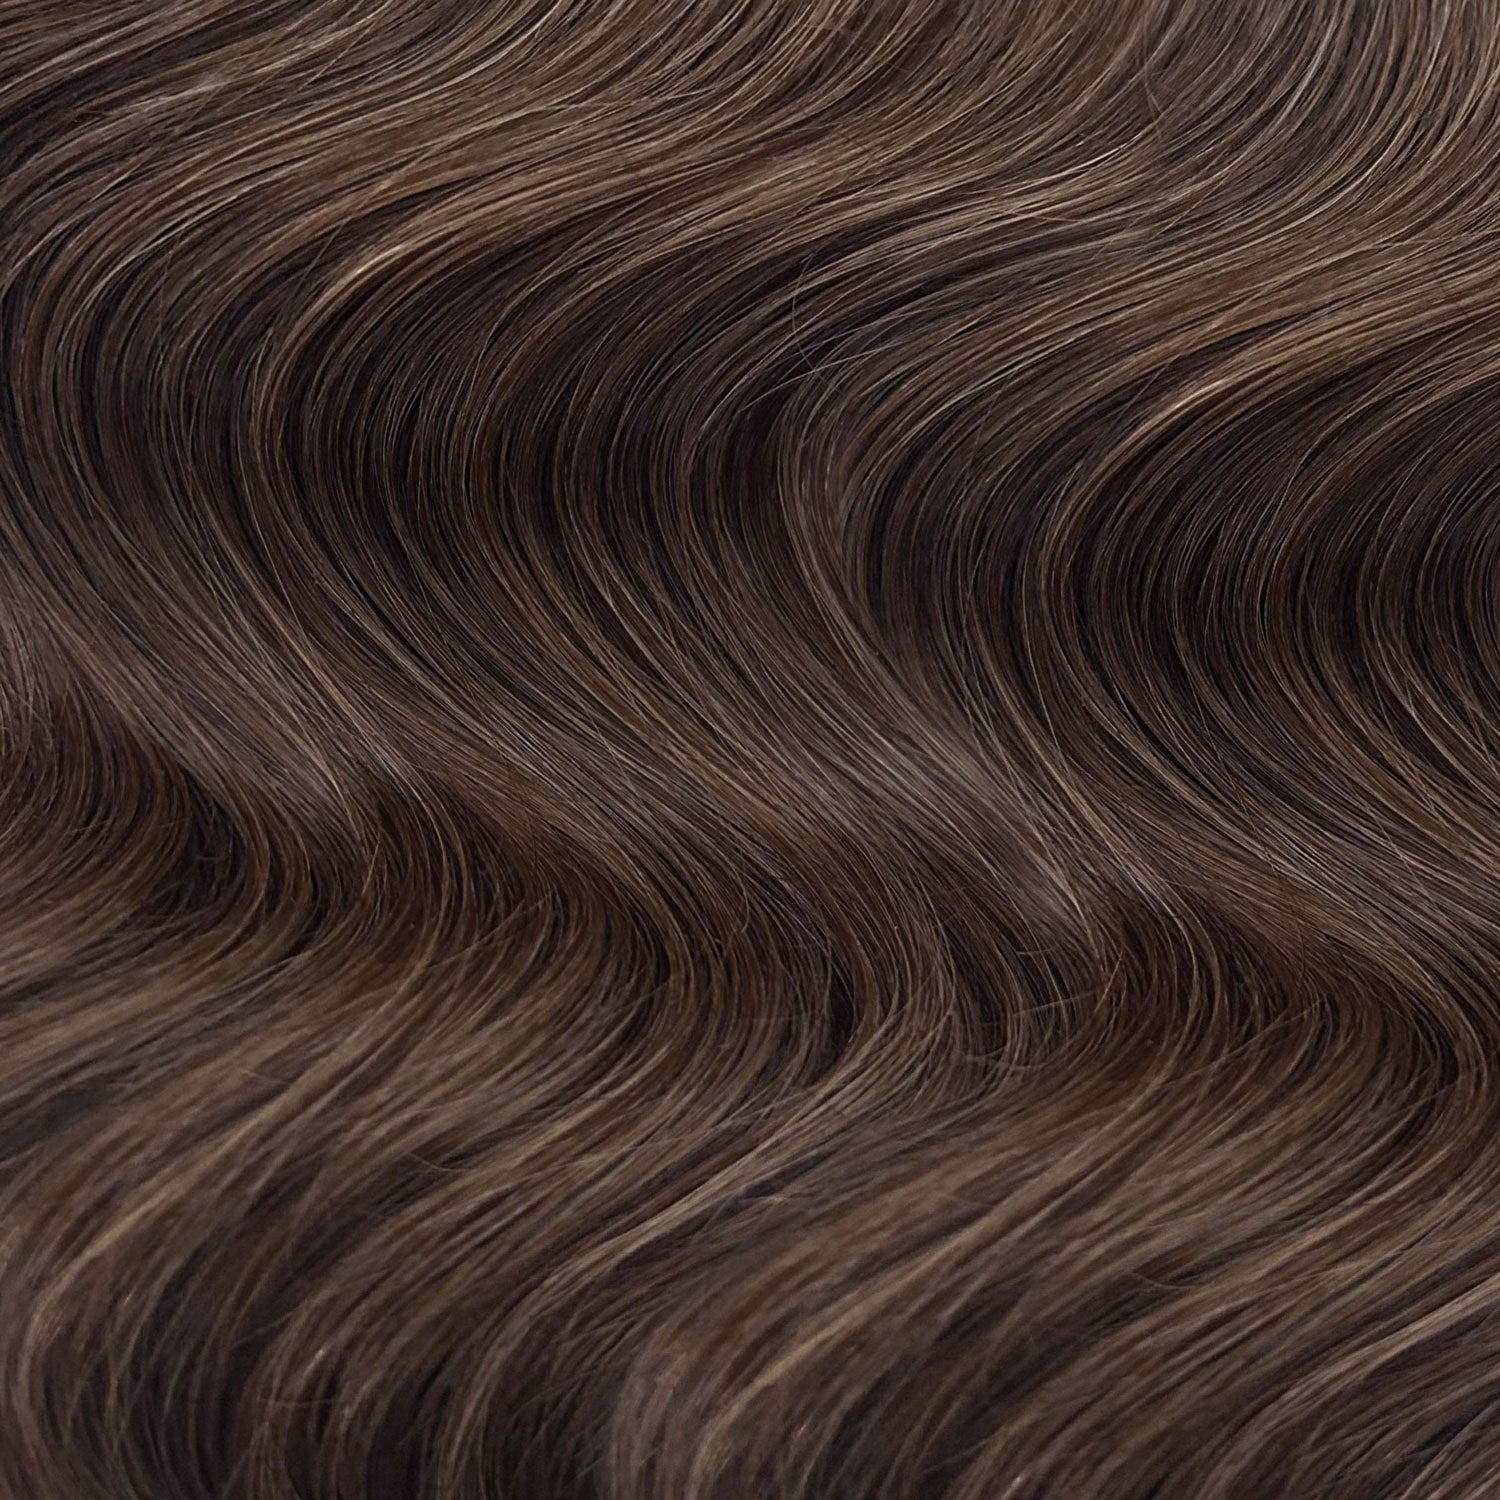 Medium Brown Human Hair Extensions